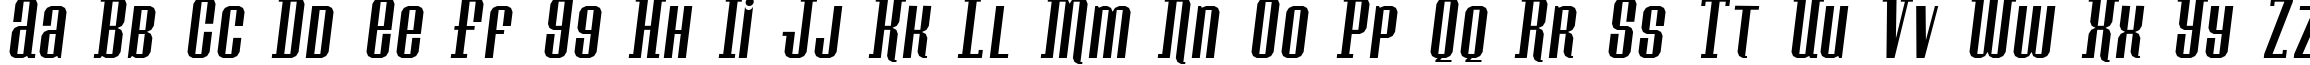 Пример написания английского алфавита шрифтом Konspiracy Theory slant